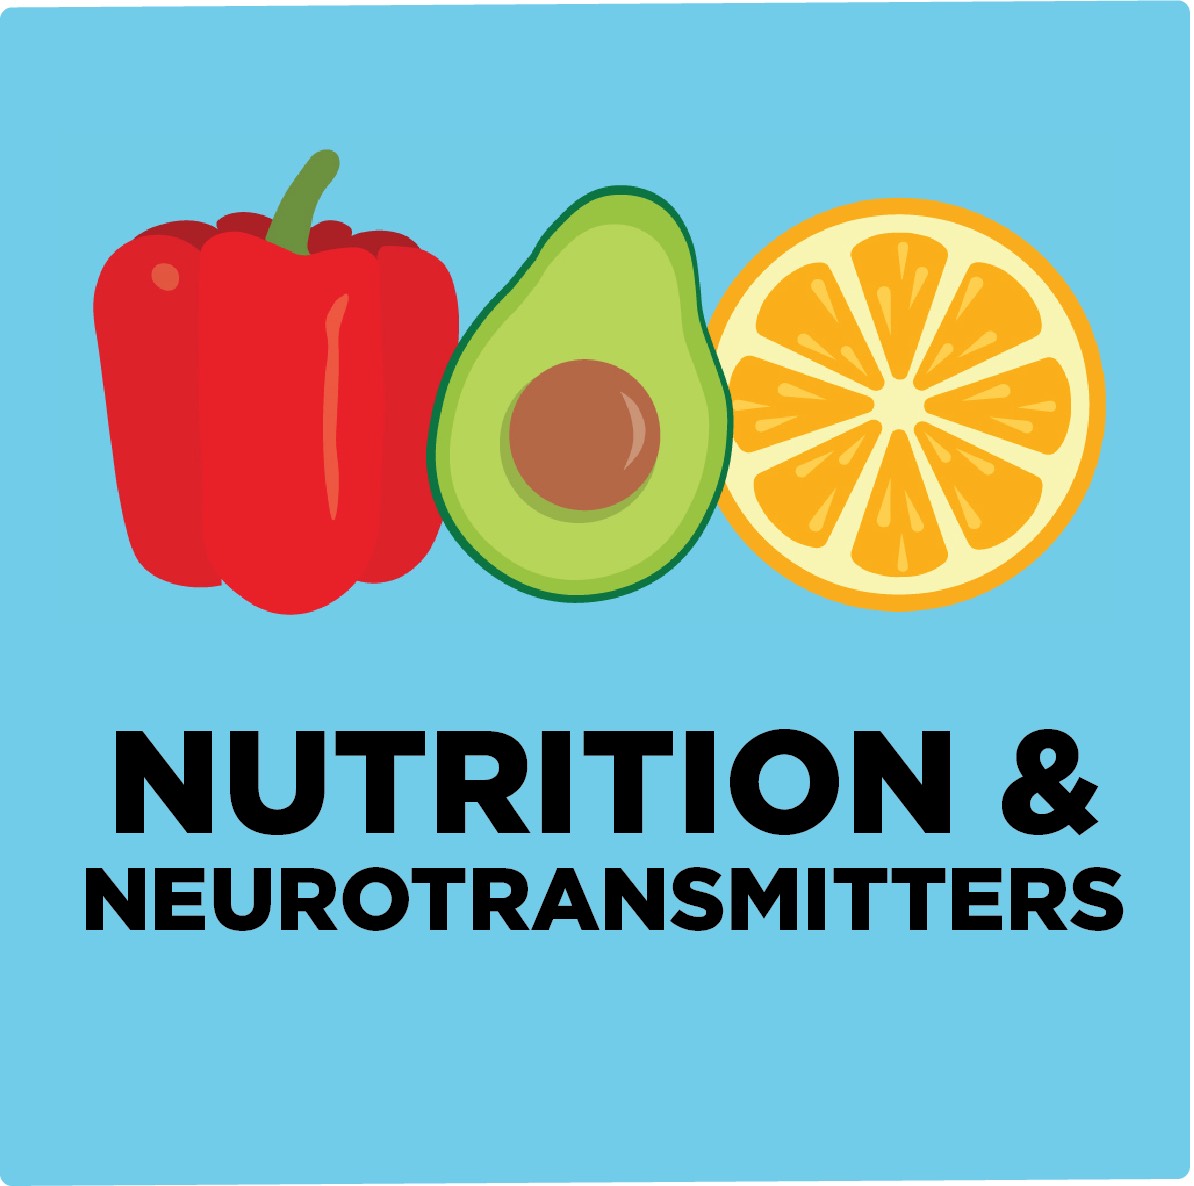 Nutrition & Neurotransmitters